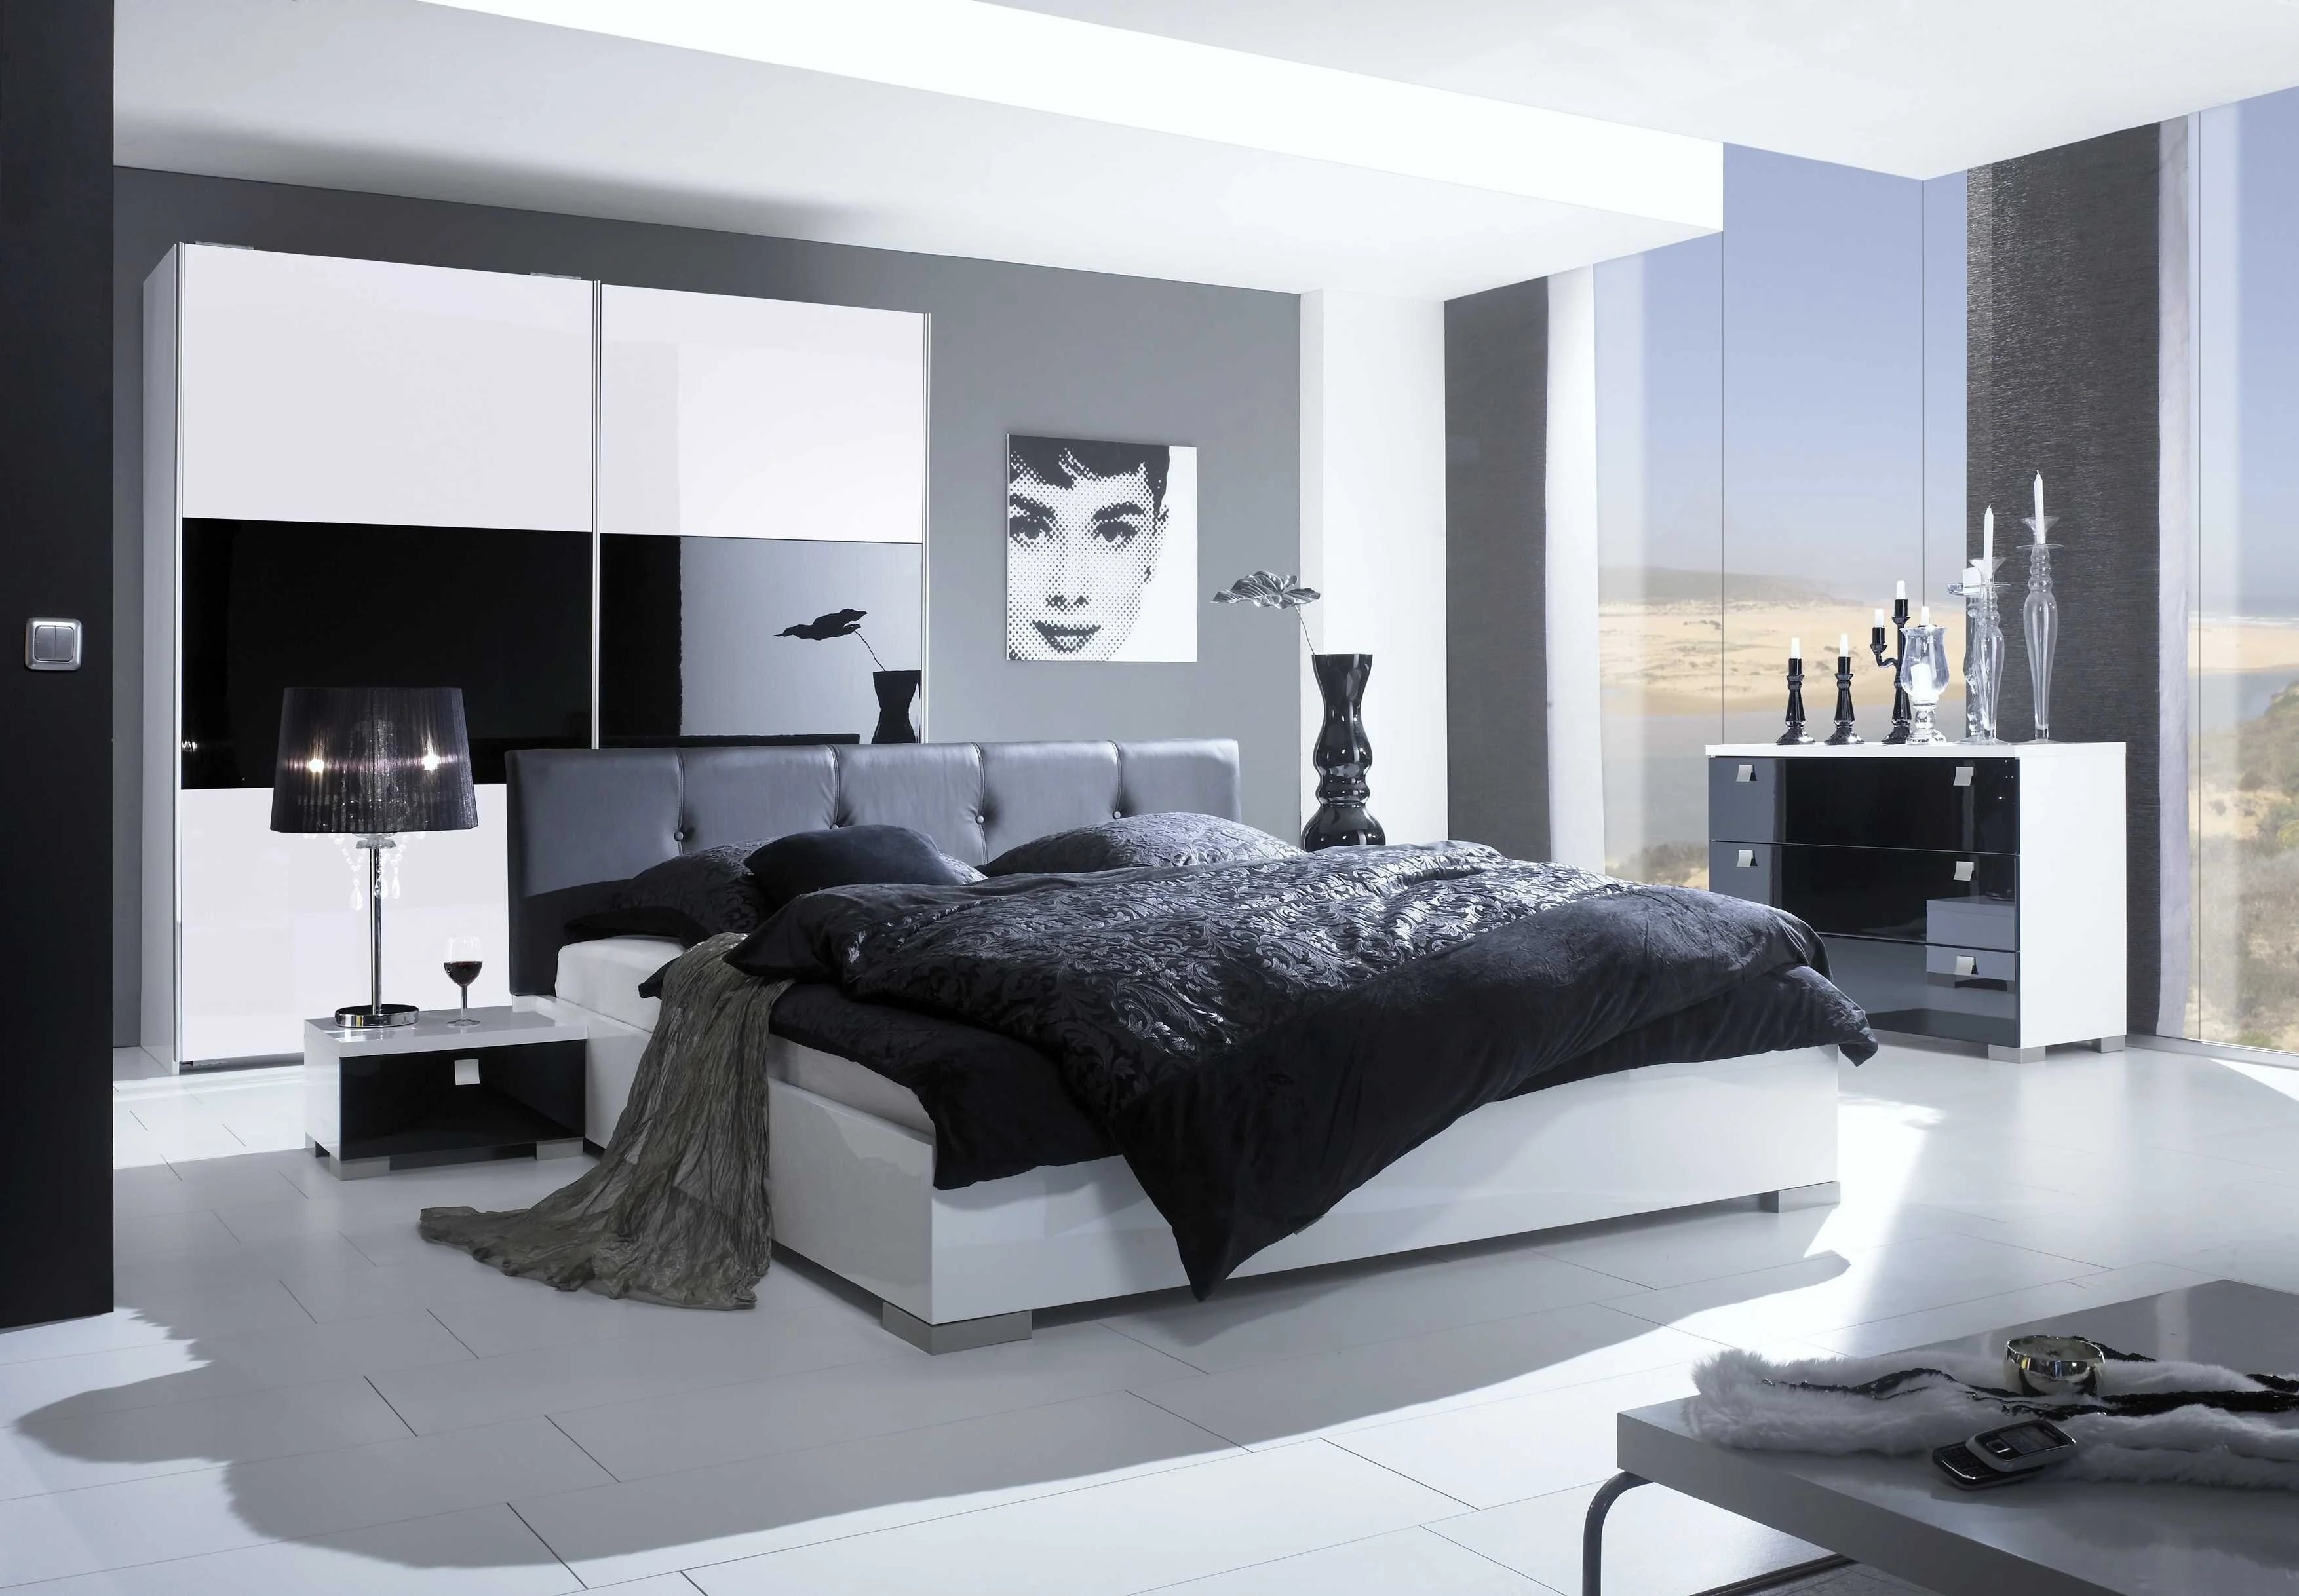 Modern Black Amp White Bedroom Interior Design Ideas Throughout Waking Imagination In Creating Creations Bedroom Design Ideas Black And White